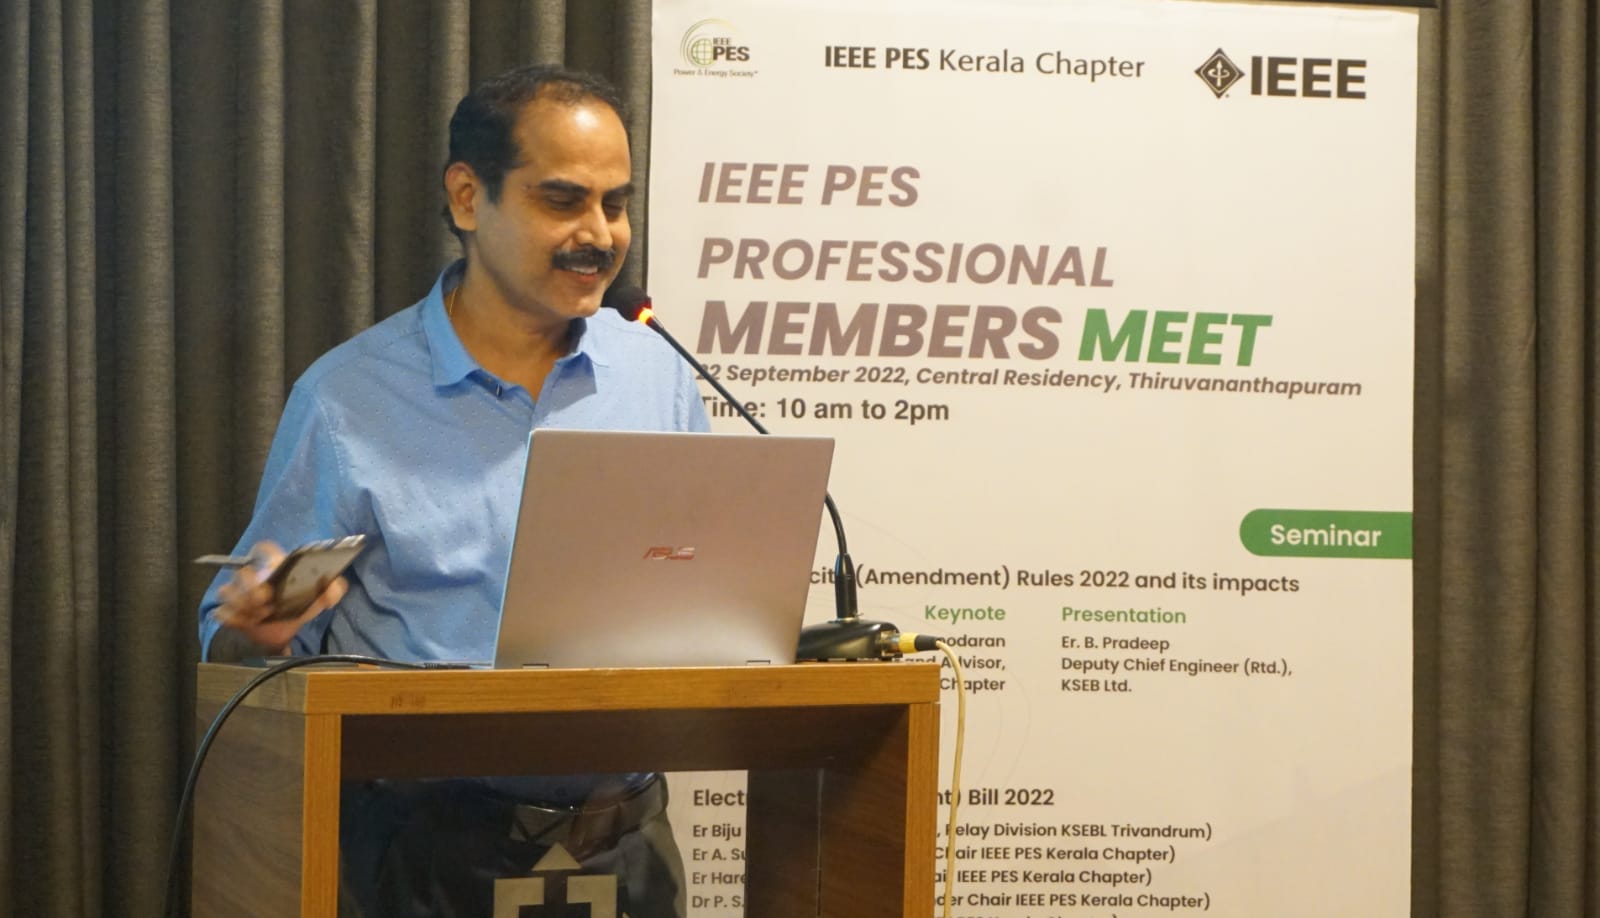 IEEE PES professional members meet held on 25th September at Central Residency, Thiruvananthapuram